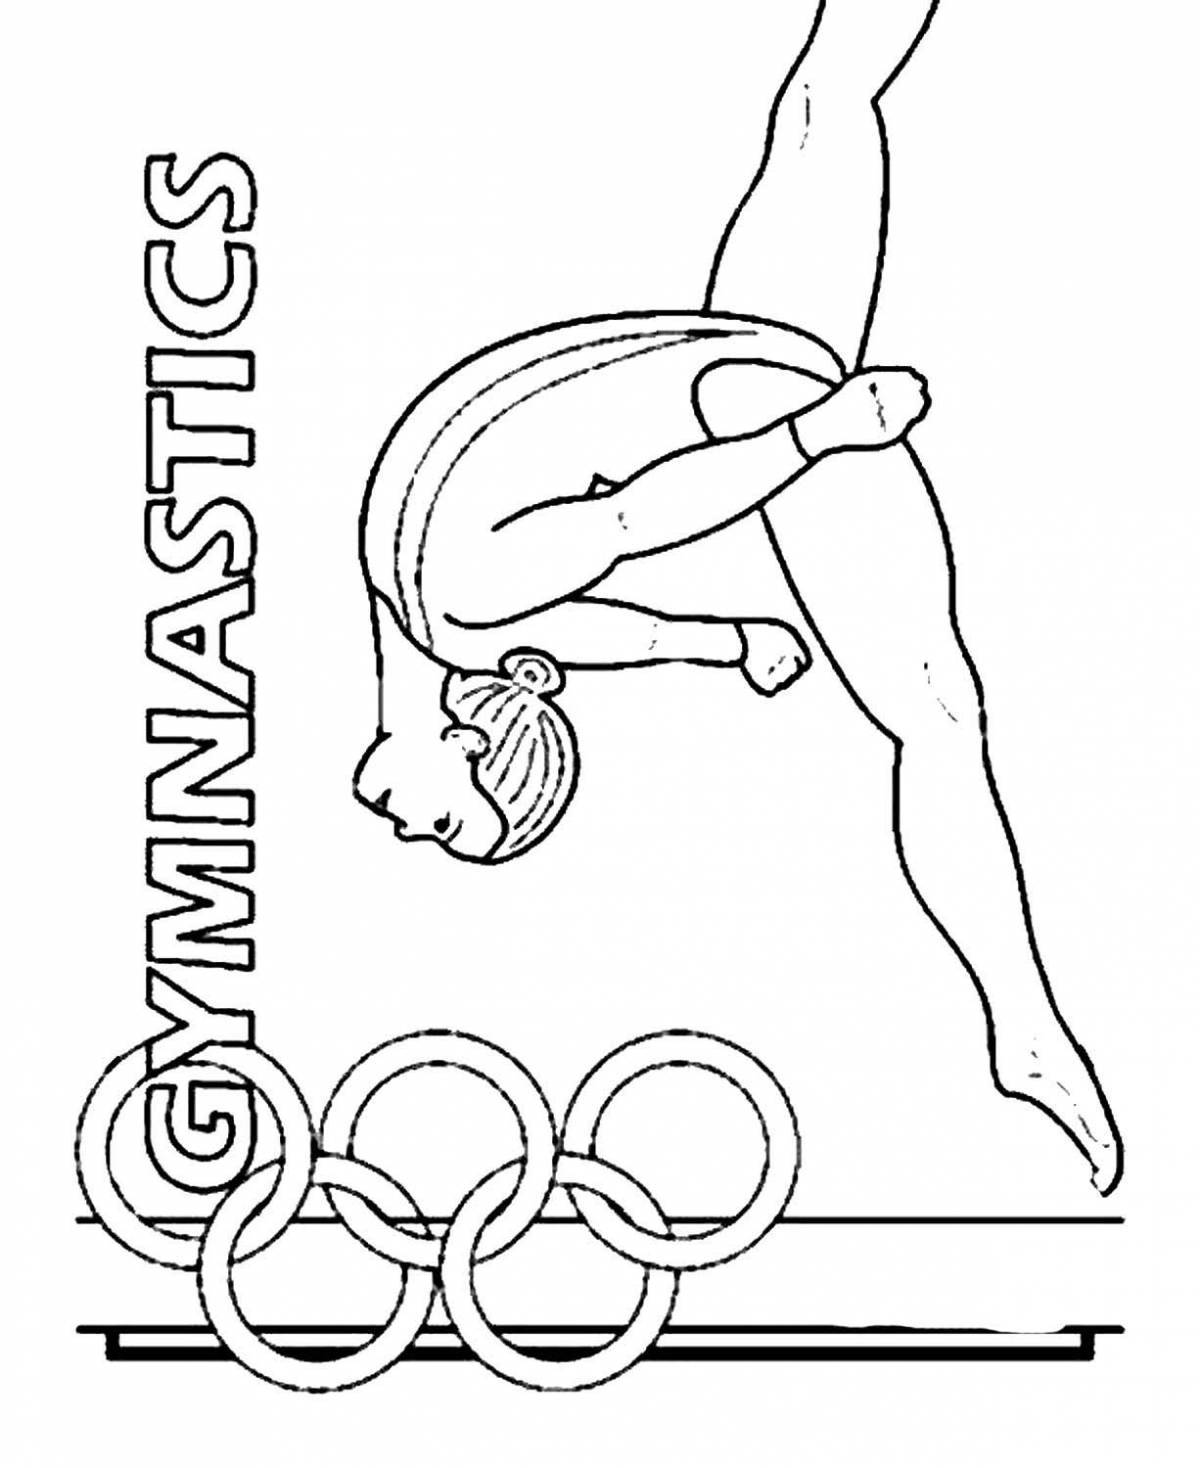 Coloring dynamic gymnastics